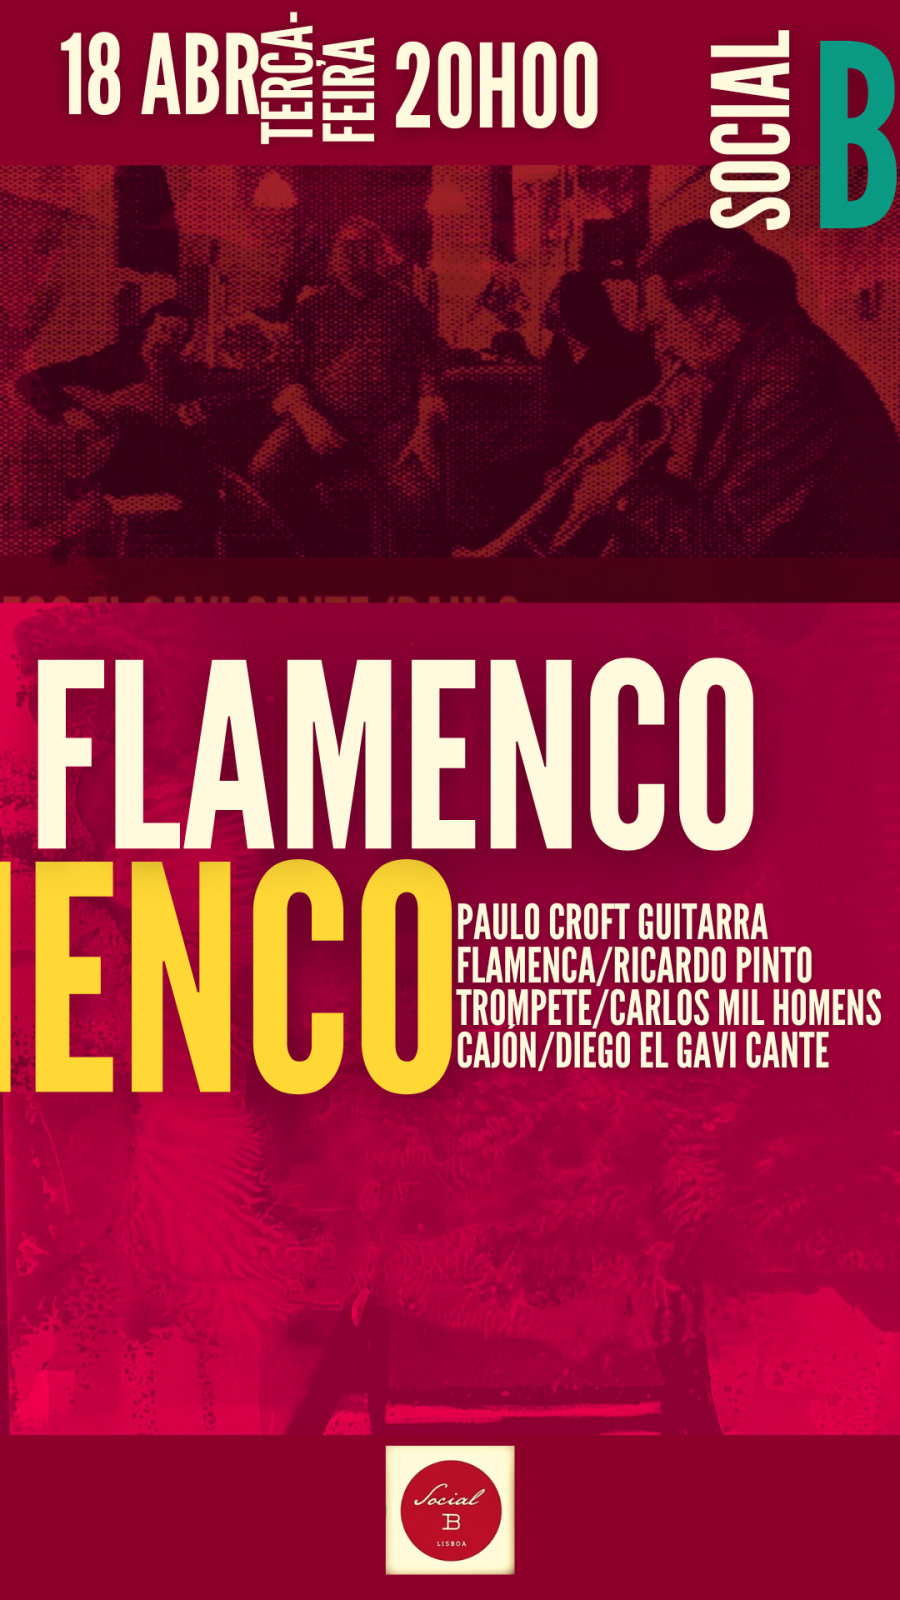 Terças-feiras de Flamenco no Social B , Lisboa